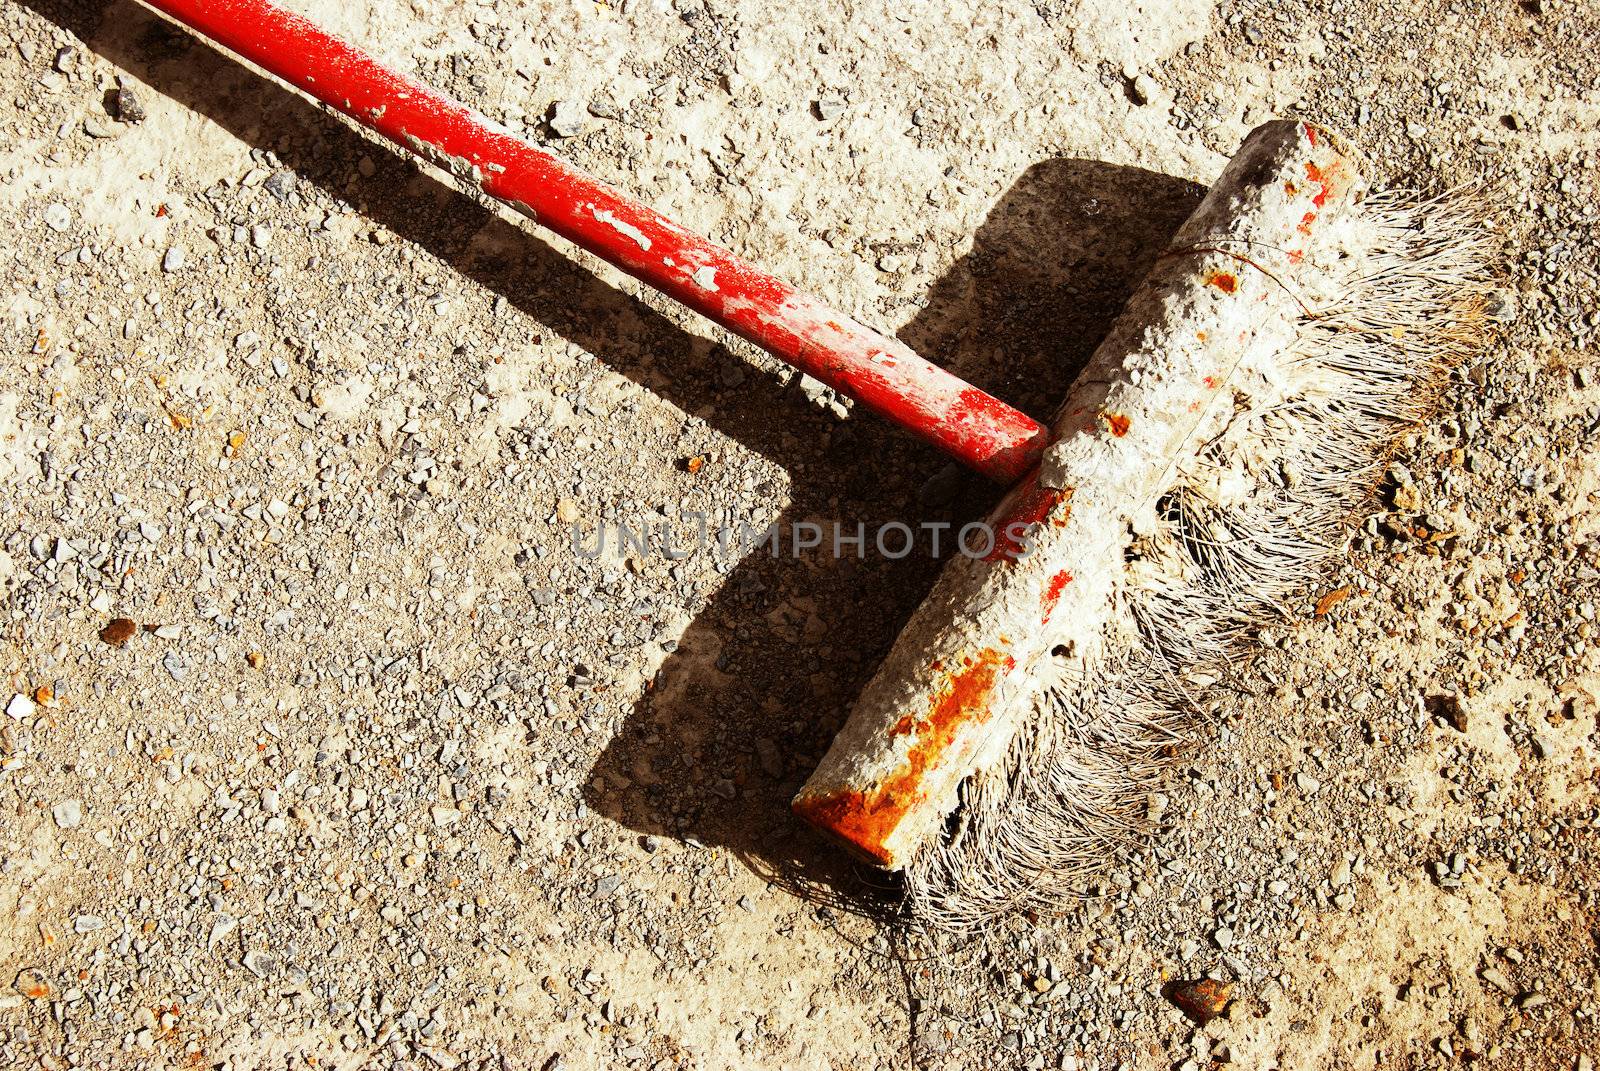 old dirty broom lying on the floor